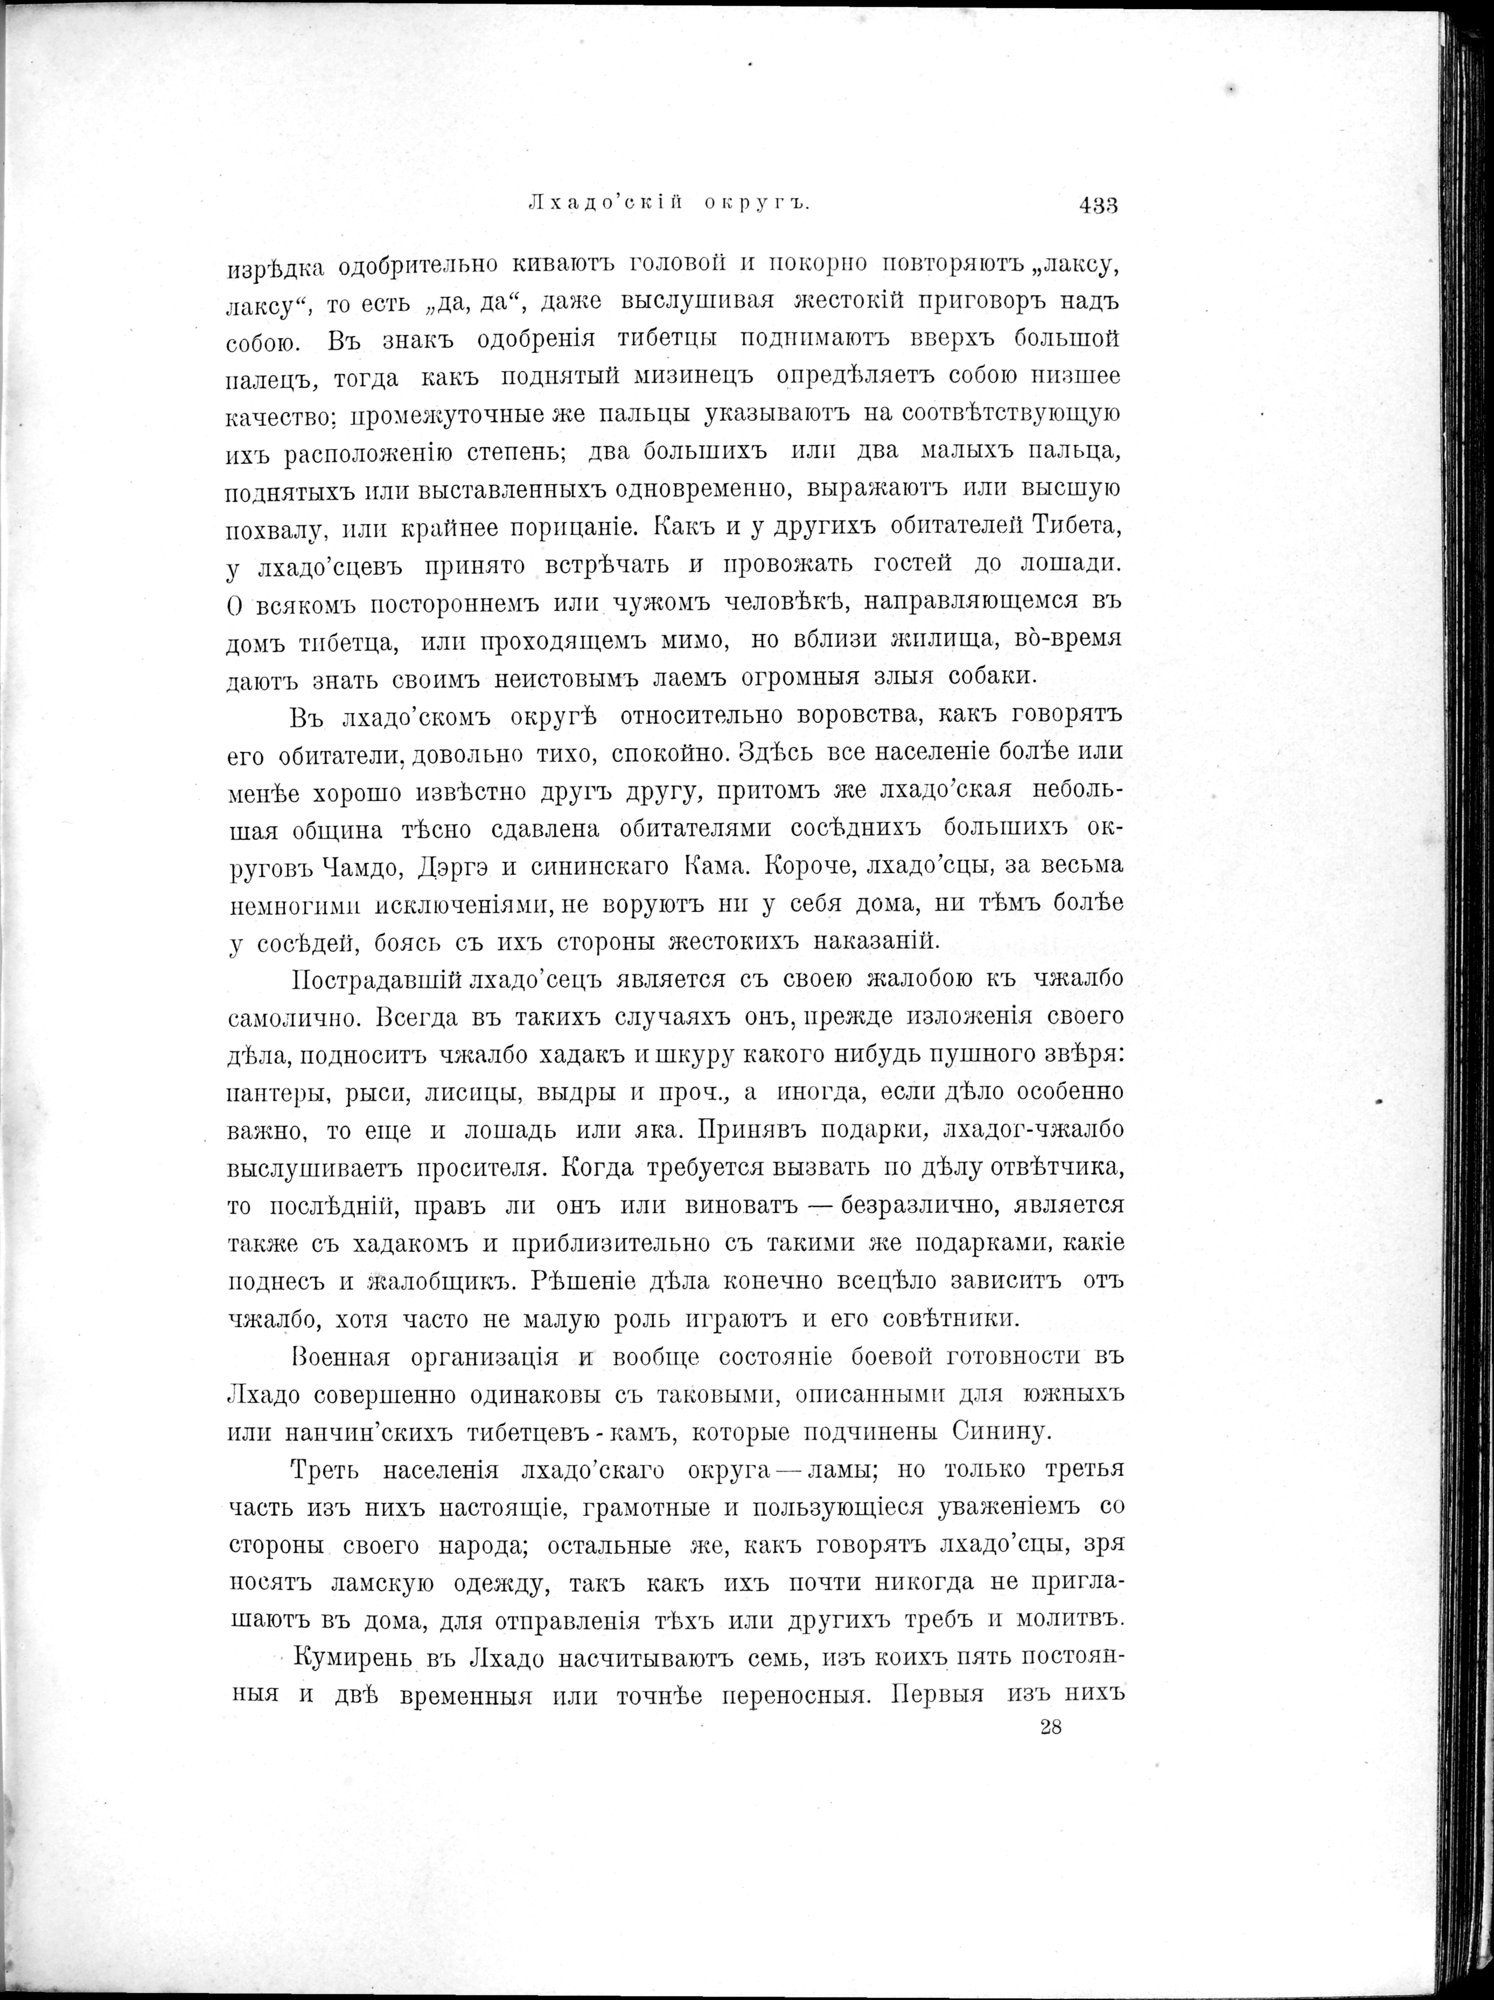 Mongoliia i Kam : vol.2 / Page 231 (Grayscale High Resolution Image)